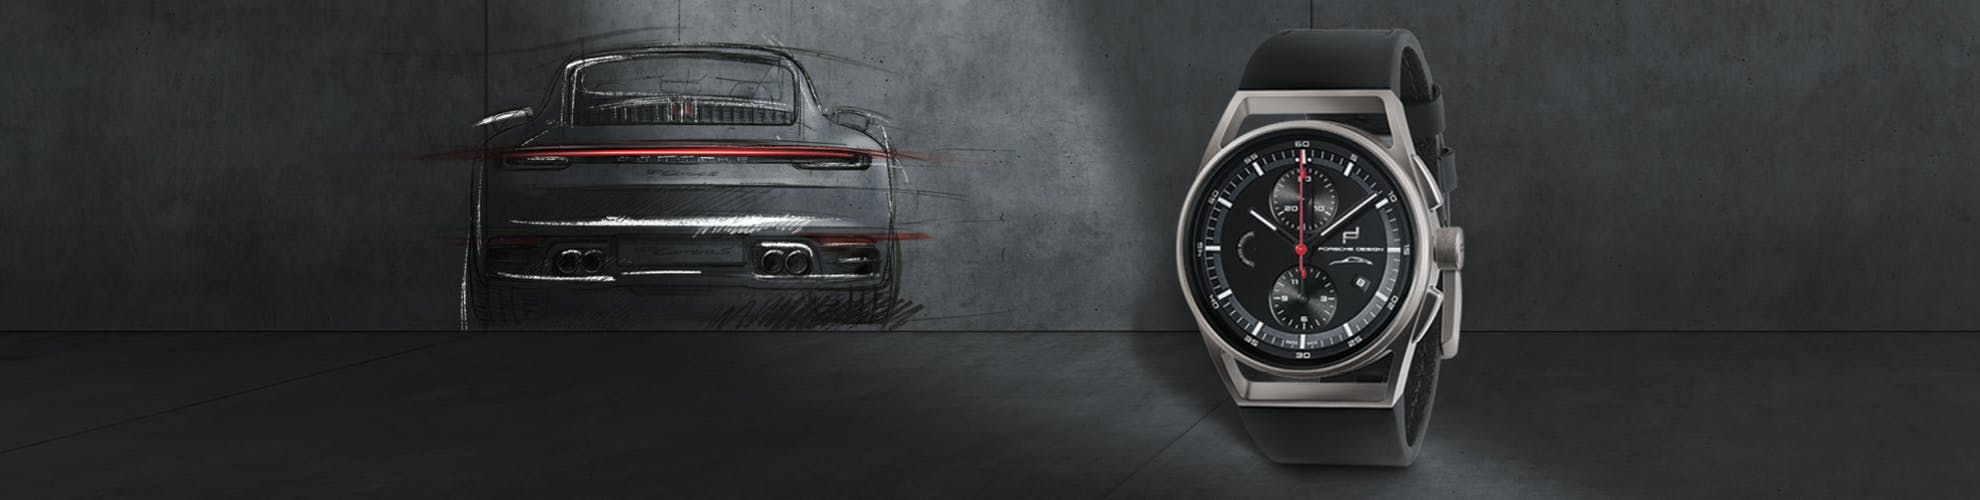 Porsche Design 911 Chronograph Timeless Machine Limited Edition